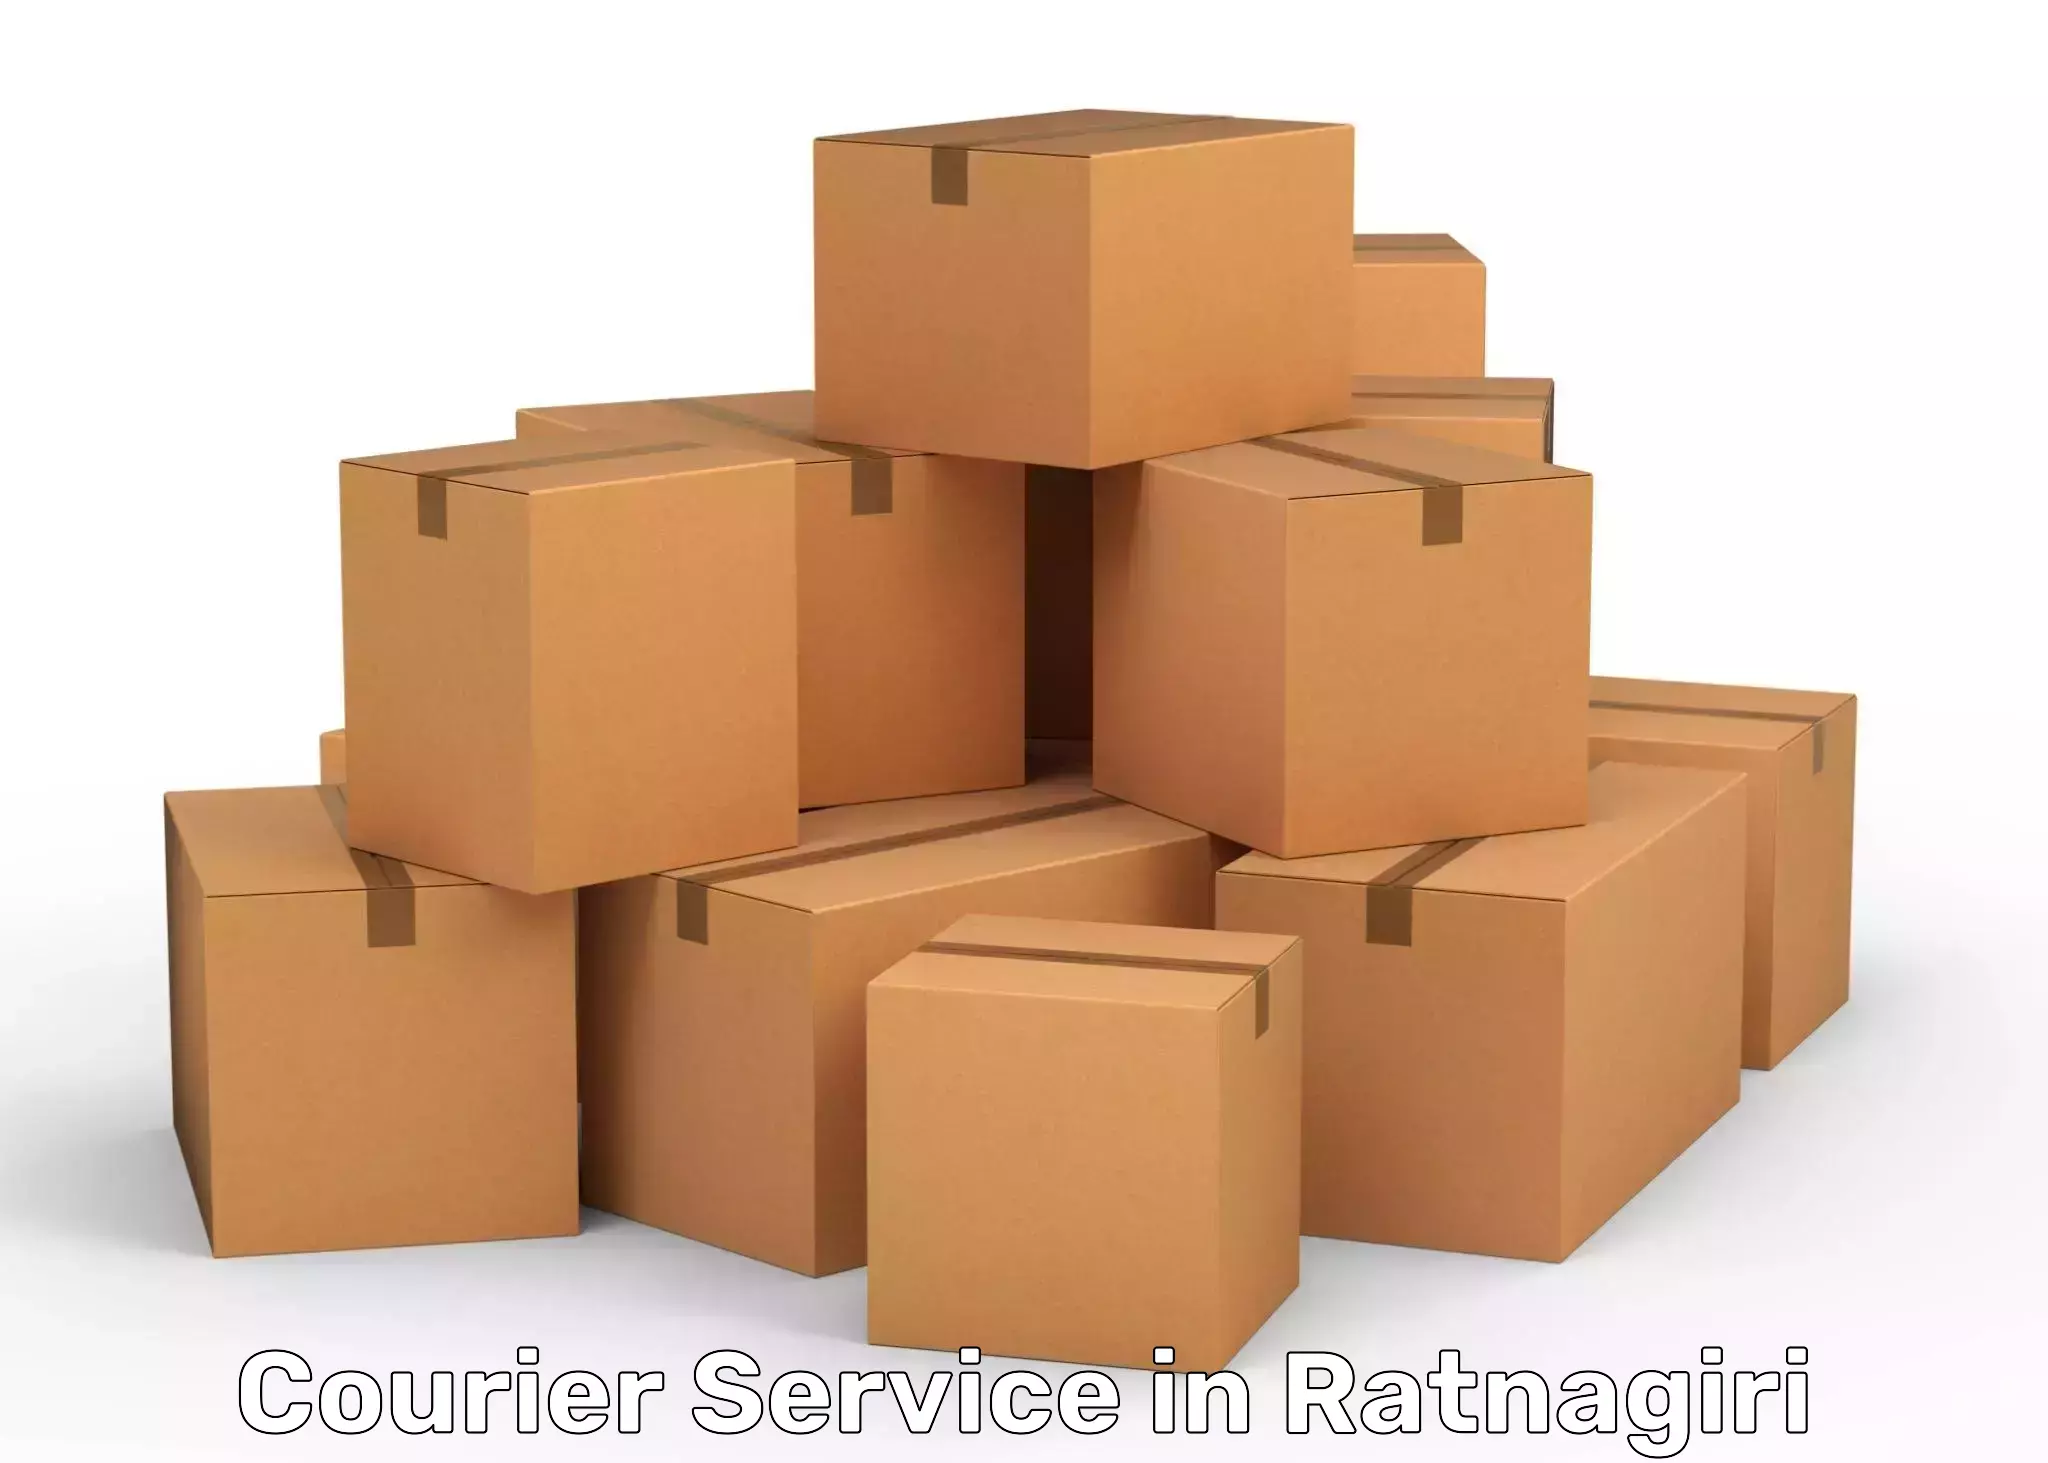 Personal parcel delivery in Ratnagiri